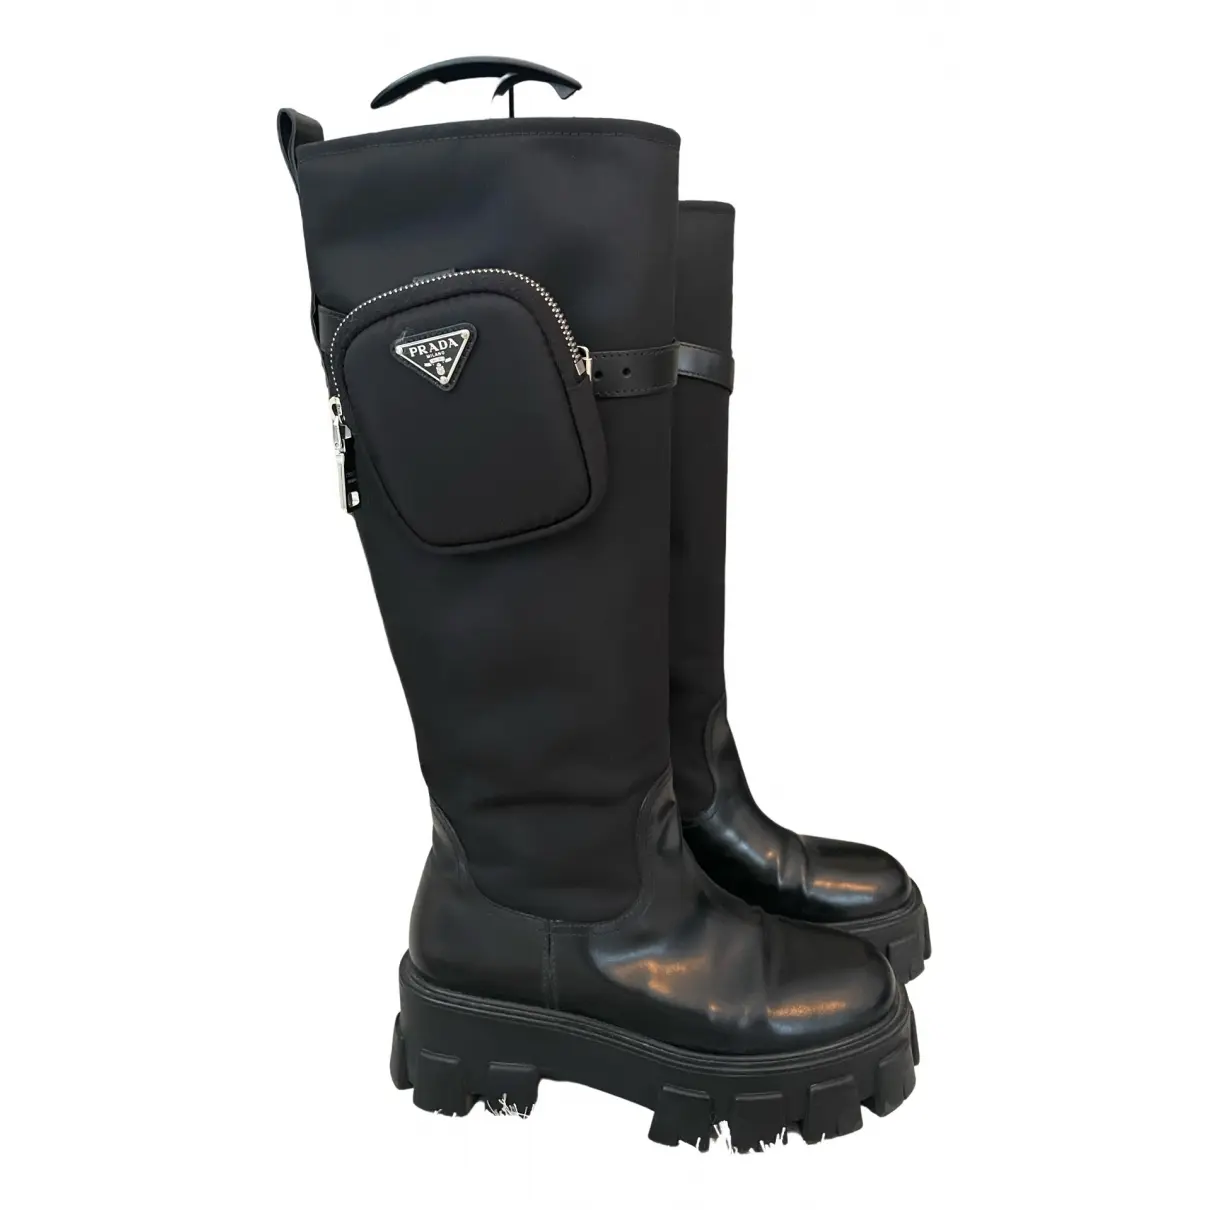 Monolith leather riding boots Prada